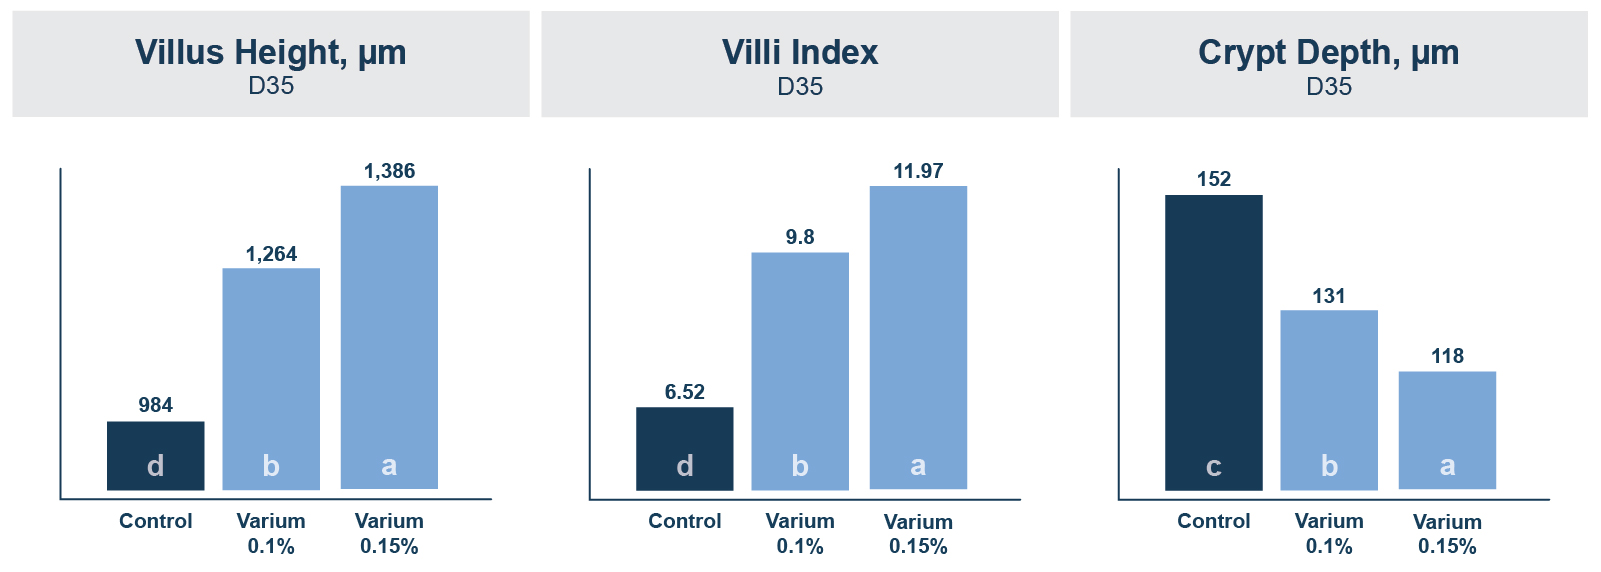 Villus Height, Villi Index, Crypt Depth of broilers information.